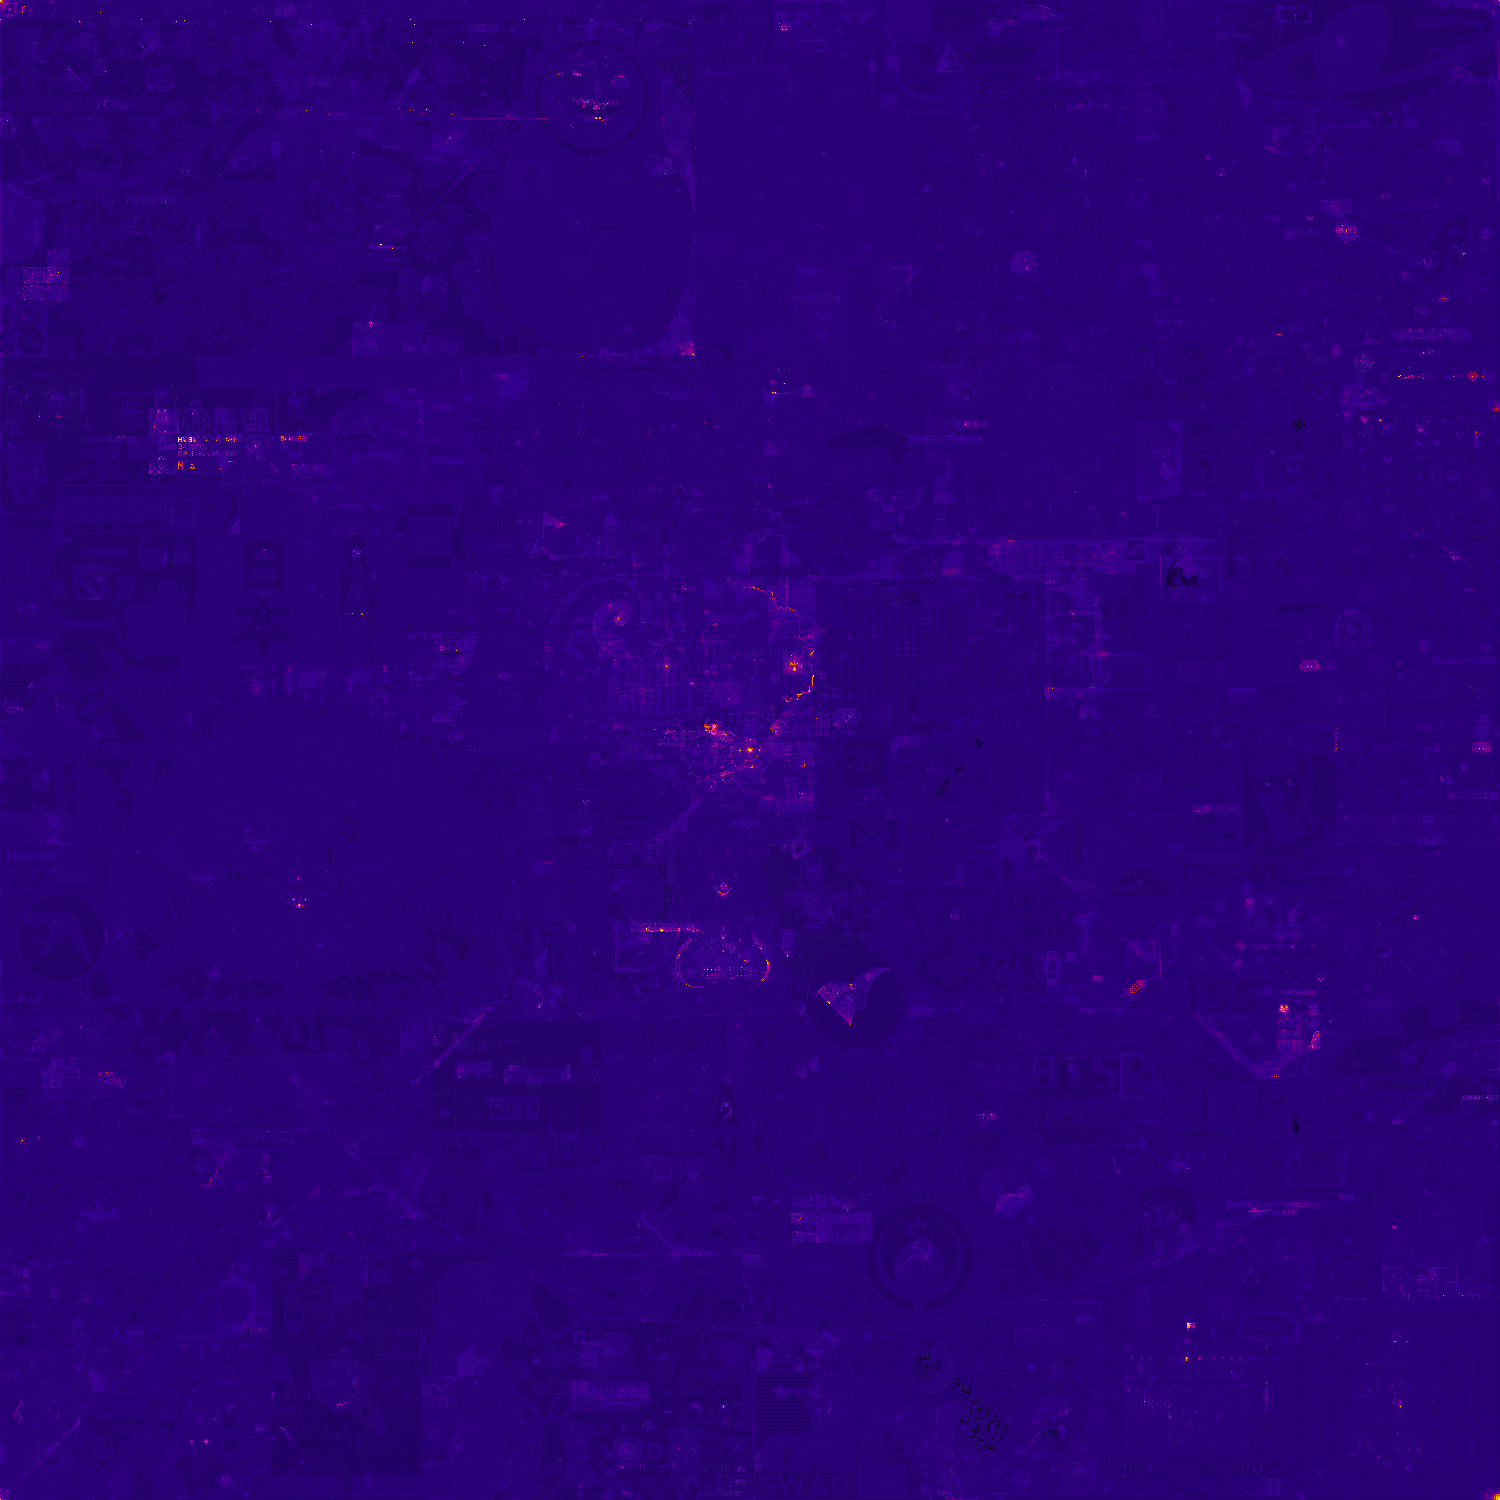 Canvas 3 - pixel heat map